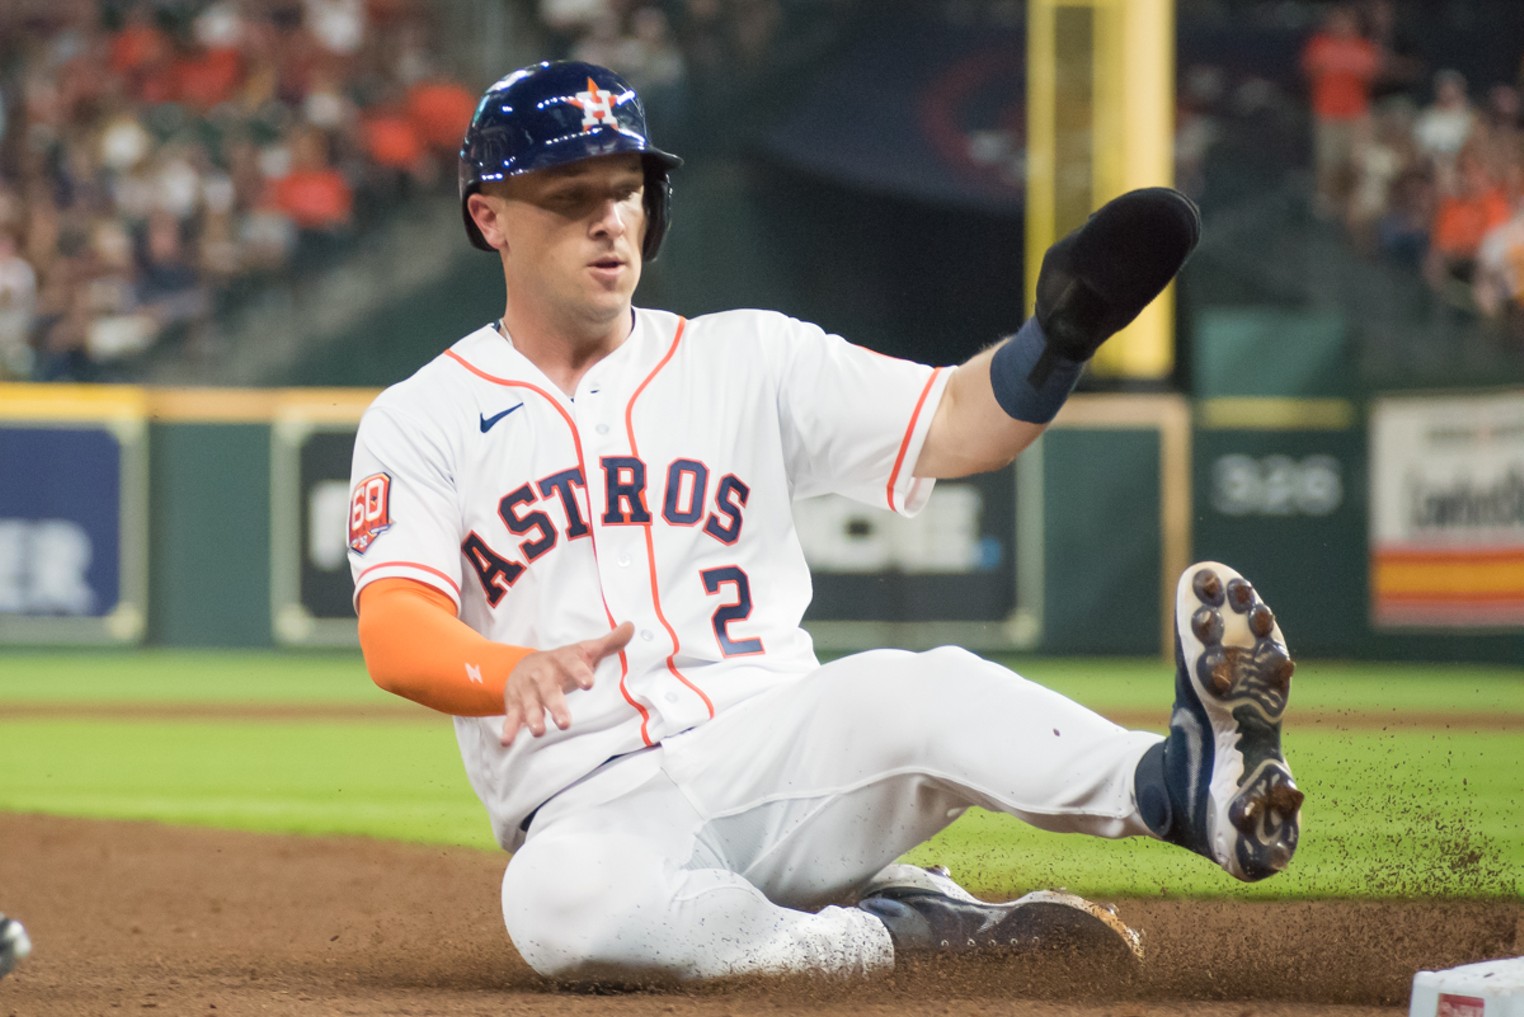 Houston Astros are adapting as Yordan Alvarez's absence continues